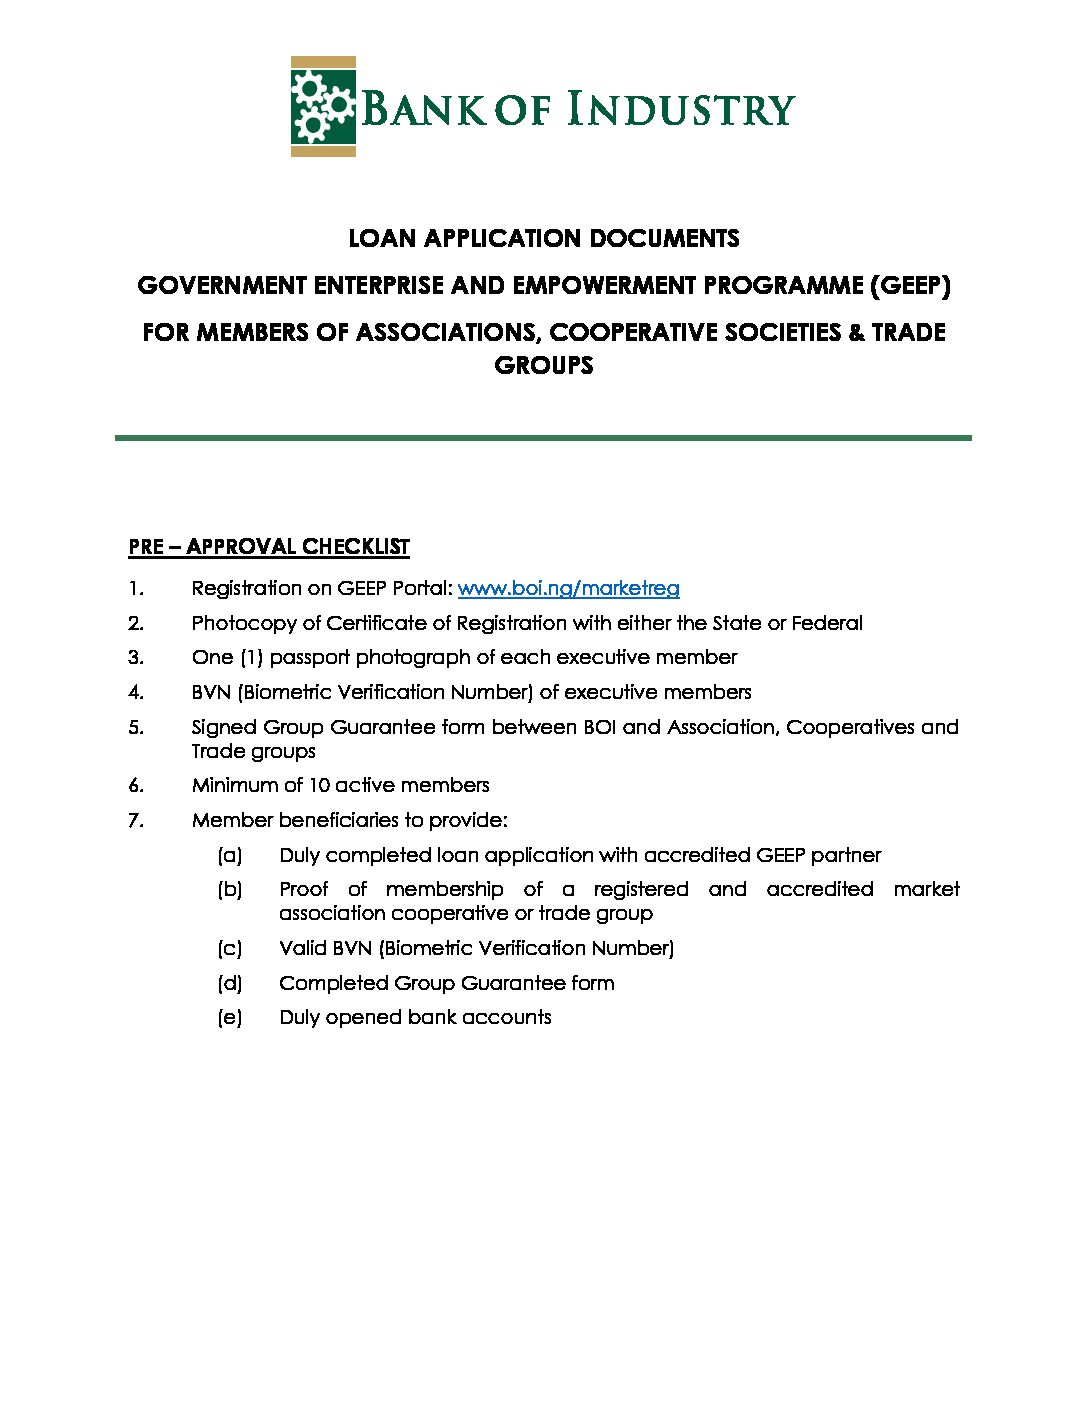 LOAN APPLICATION CHECKLIST GEEP 1 pdf Recruitment